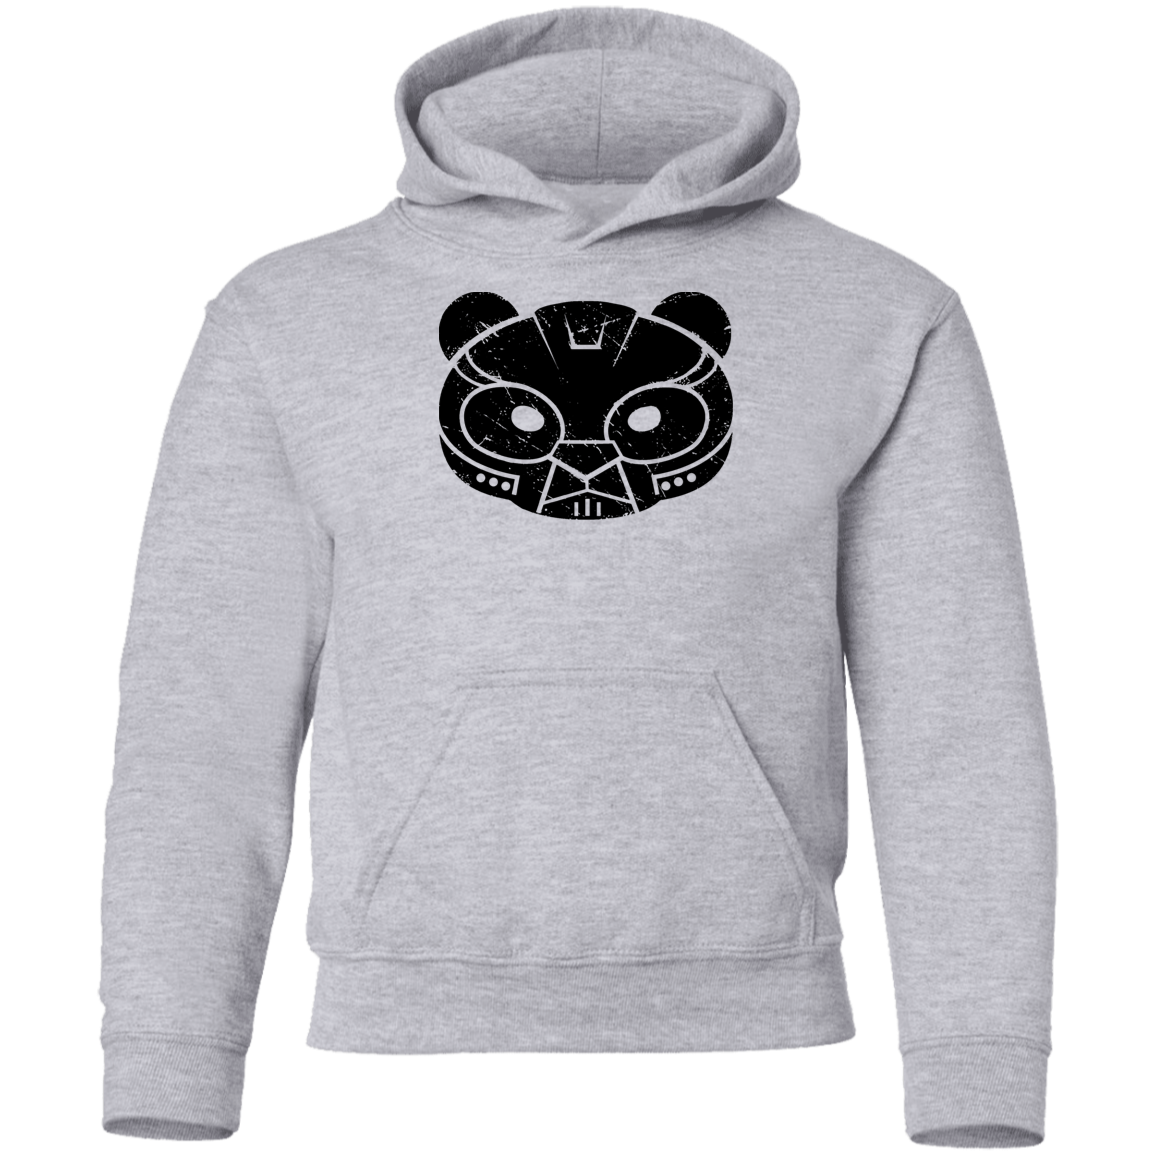 Black Distressed Emblem Hoodies for Kids (Bear/Bear Company)